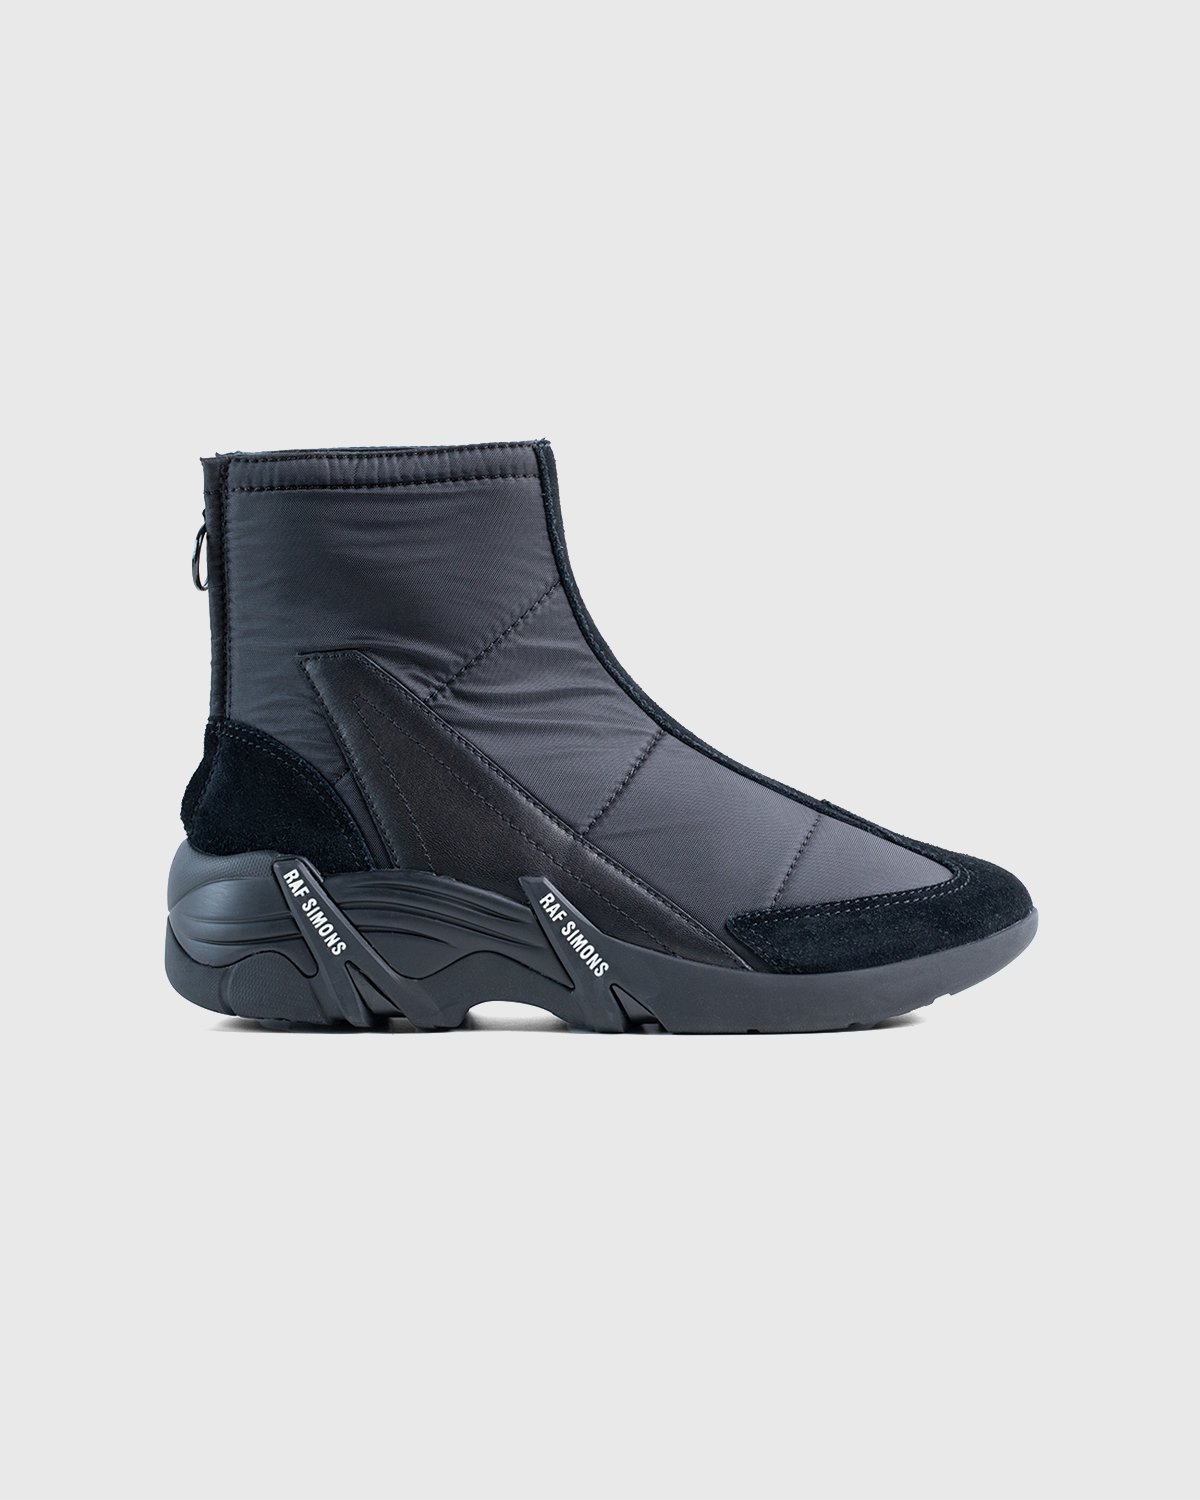 Raf Simons - Cylon 22 Black - Footwear - Black - Image 1